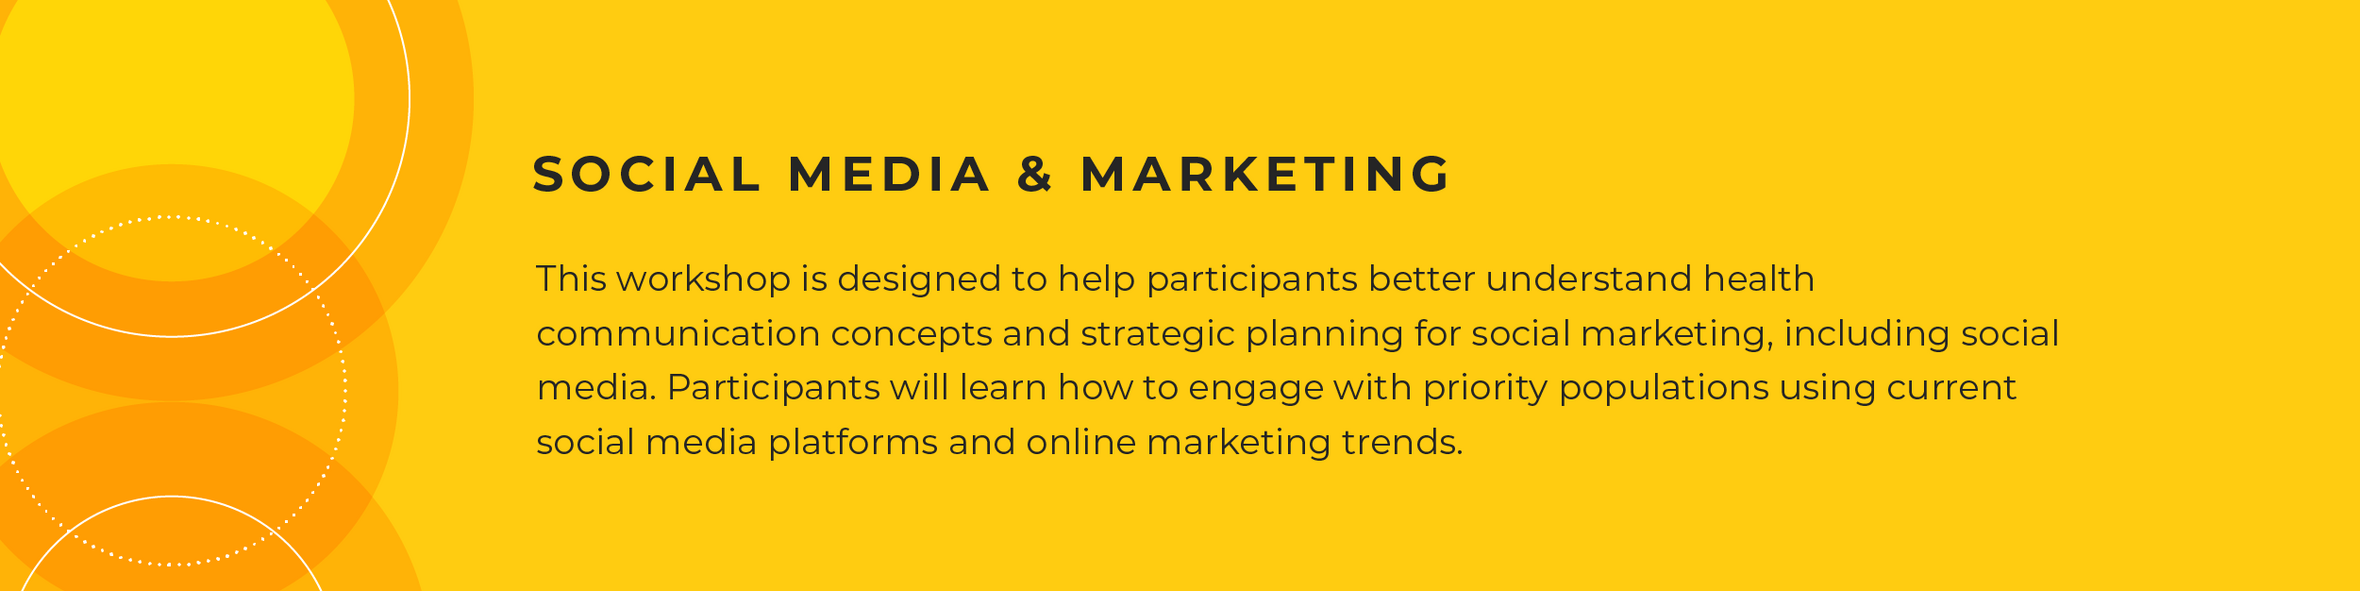 Social media and marketing